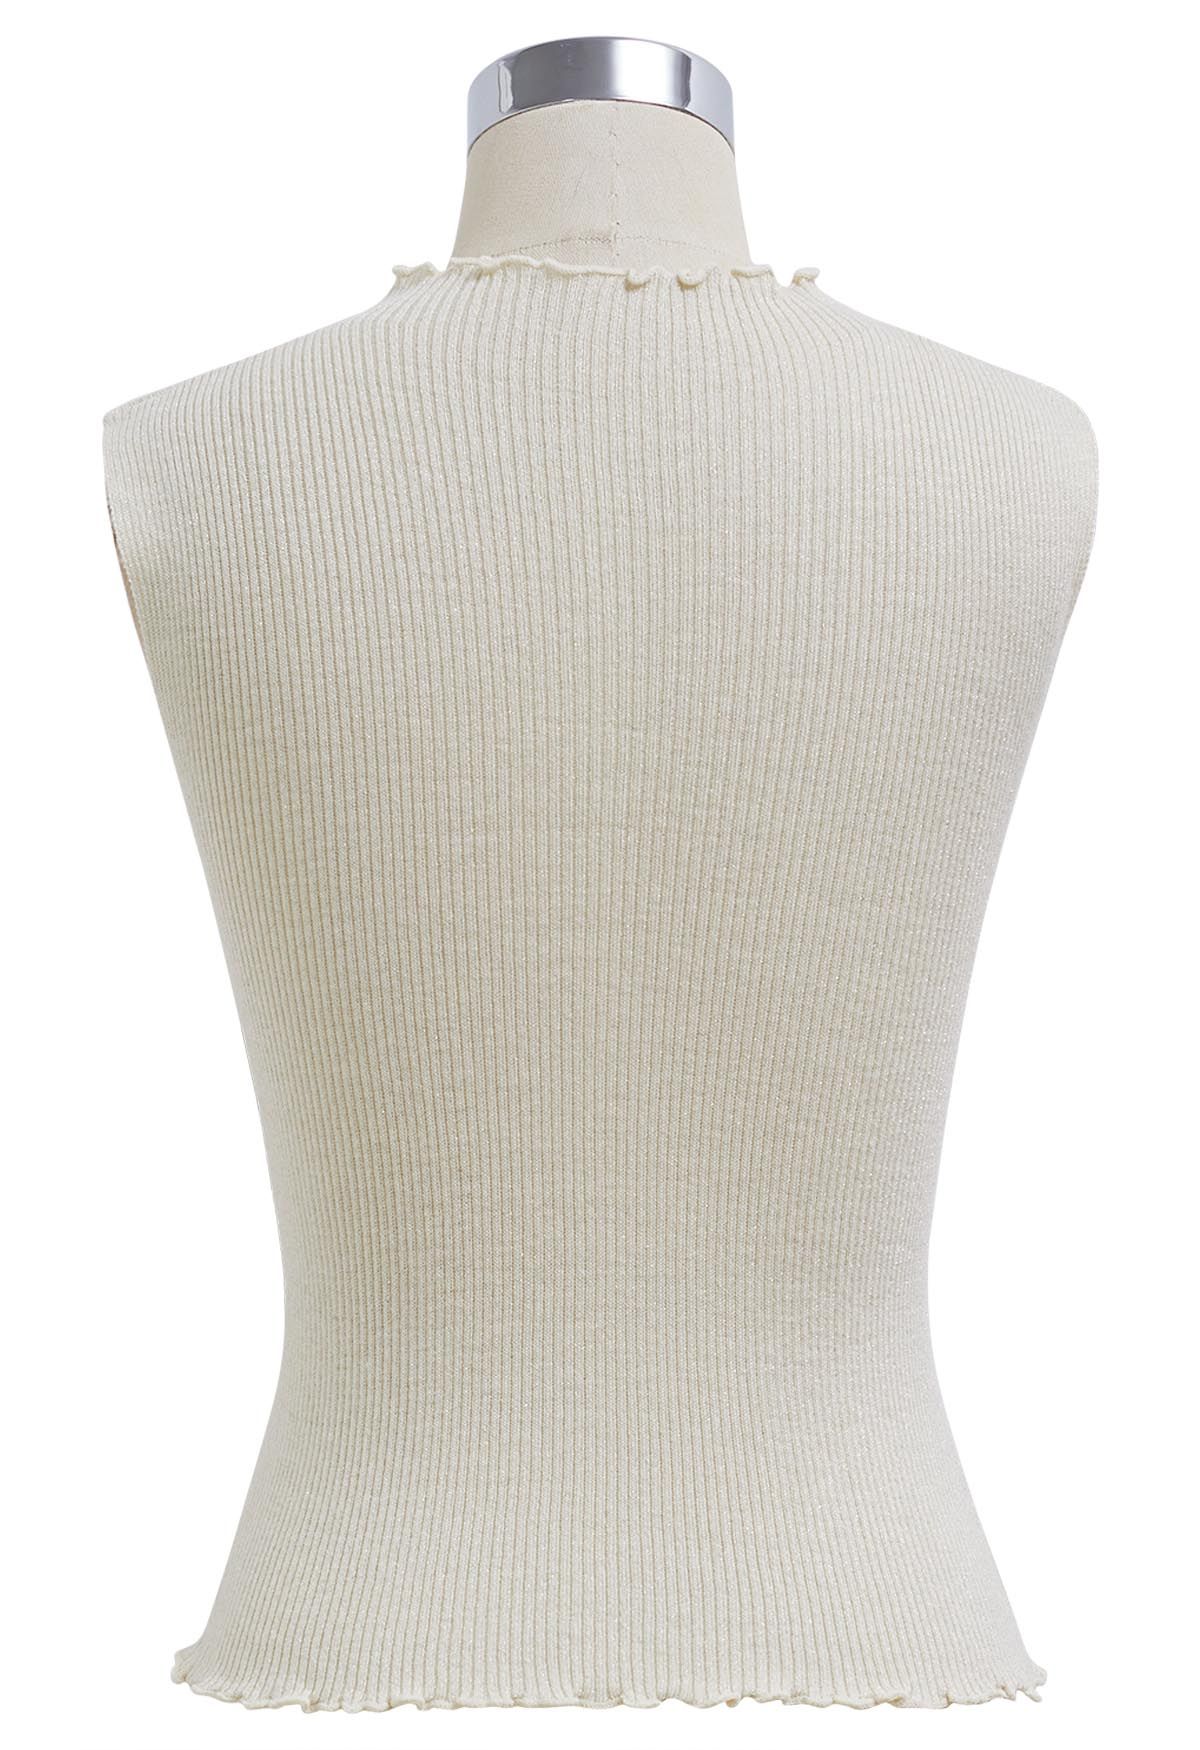 Glittery Lettuce Edge Sleeveless Knit Top in Cream